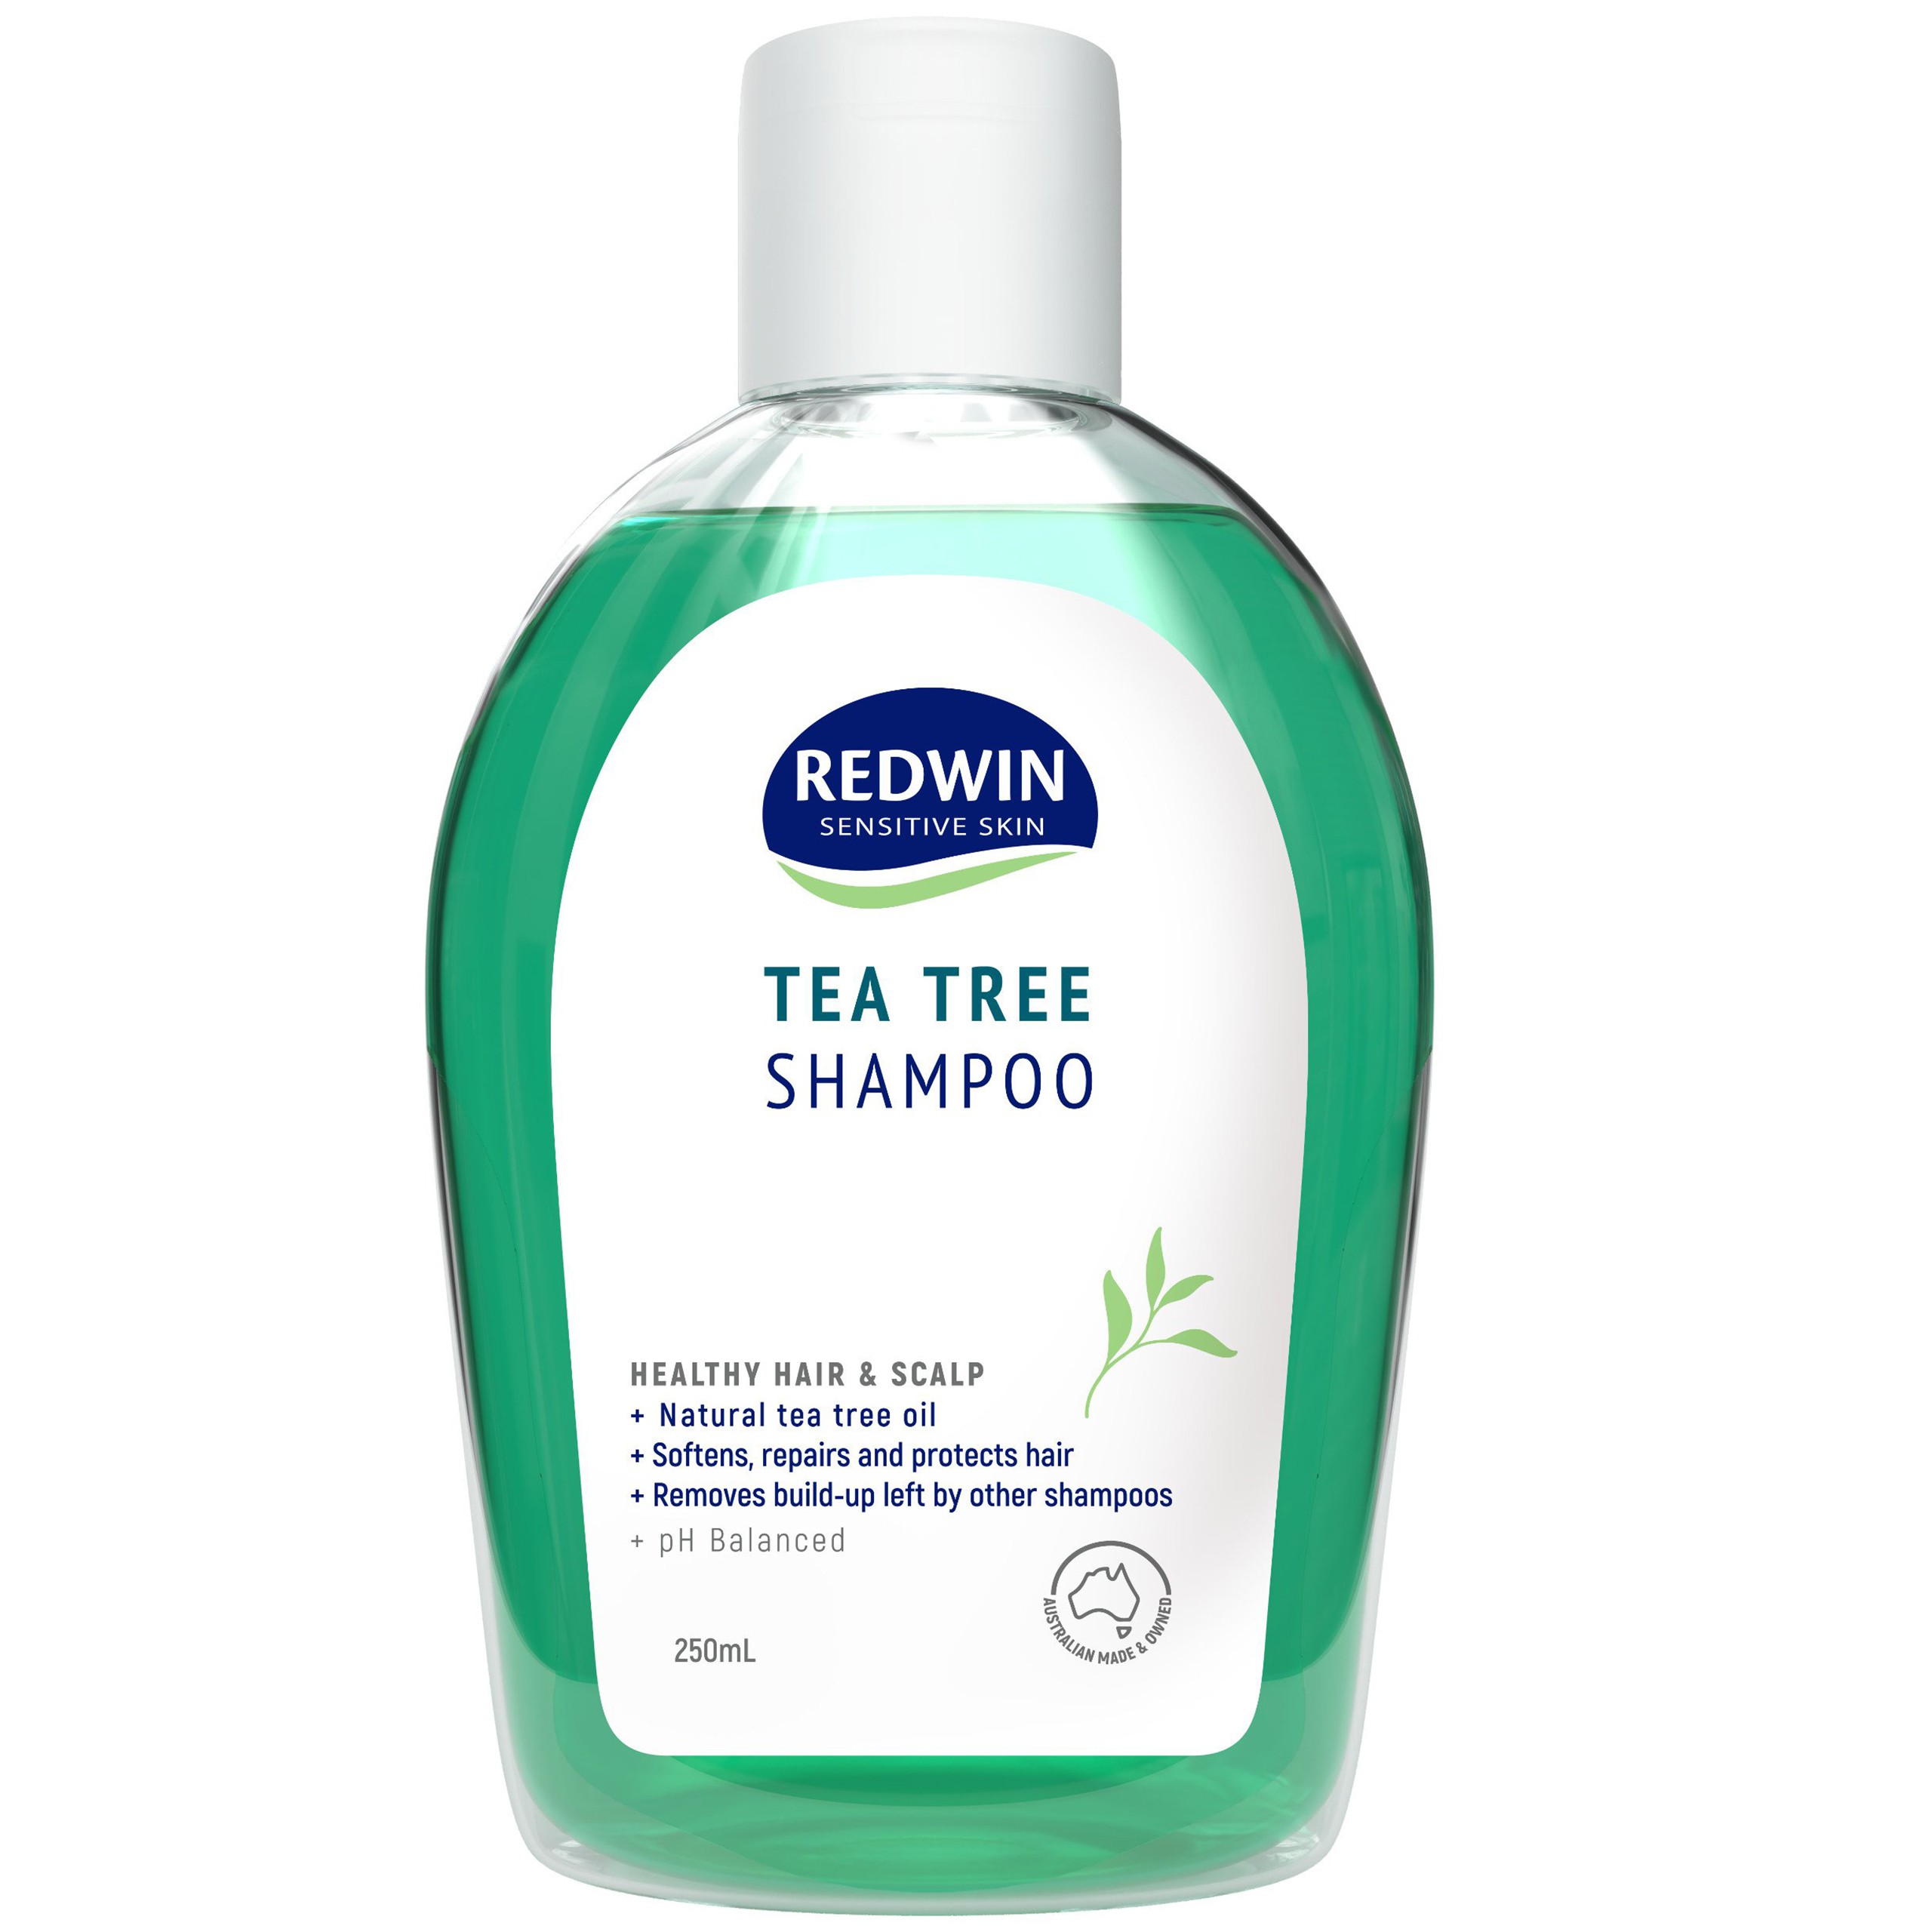 Dầu gội REDWIN Tea Tree Shampoo 250ml giảm những triệu chứng ngứa, gàu, vảy, nấm da đầu